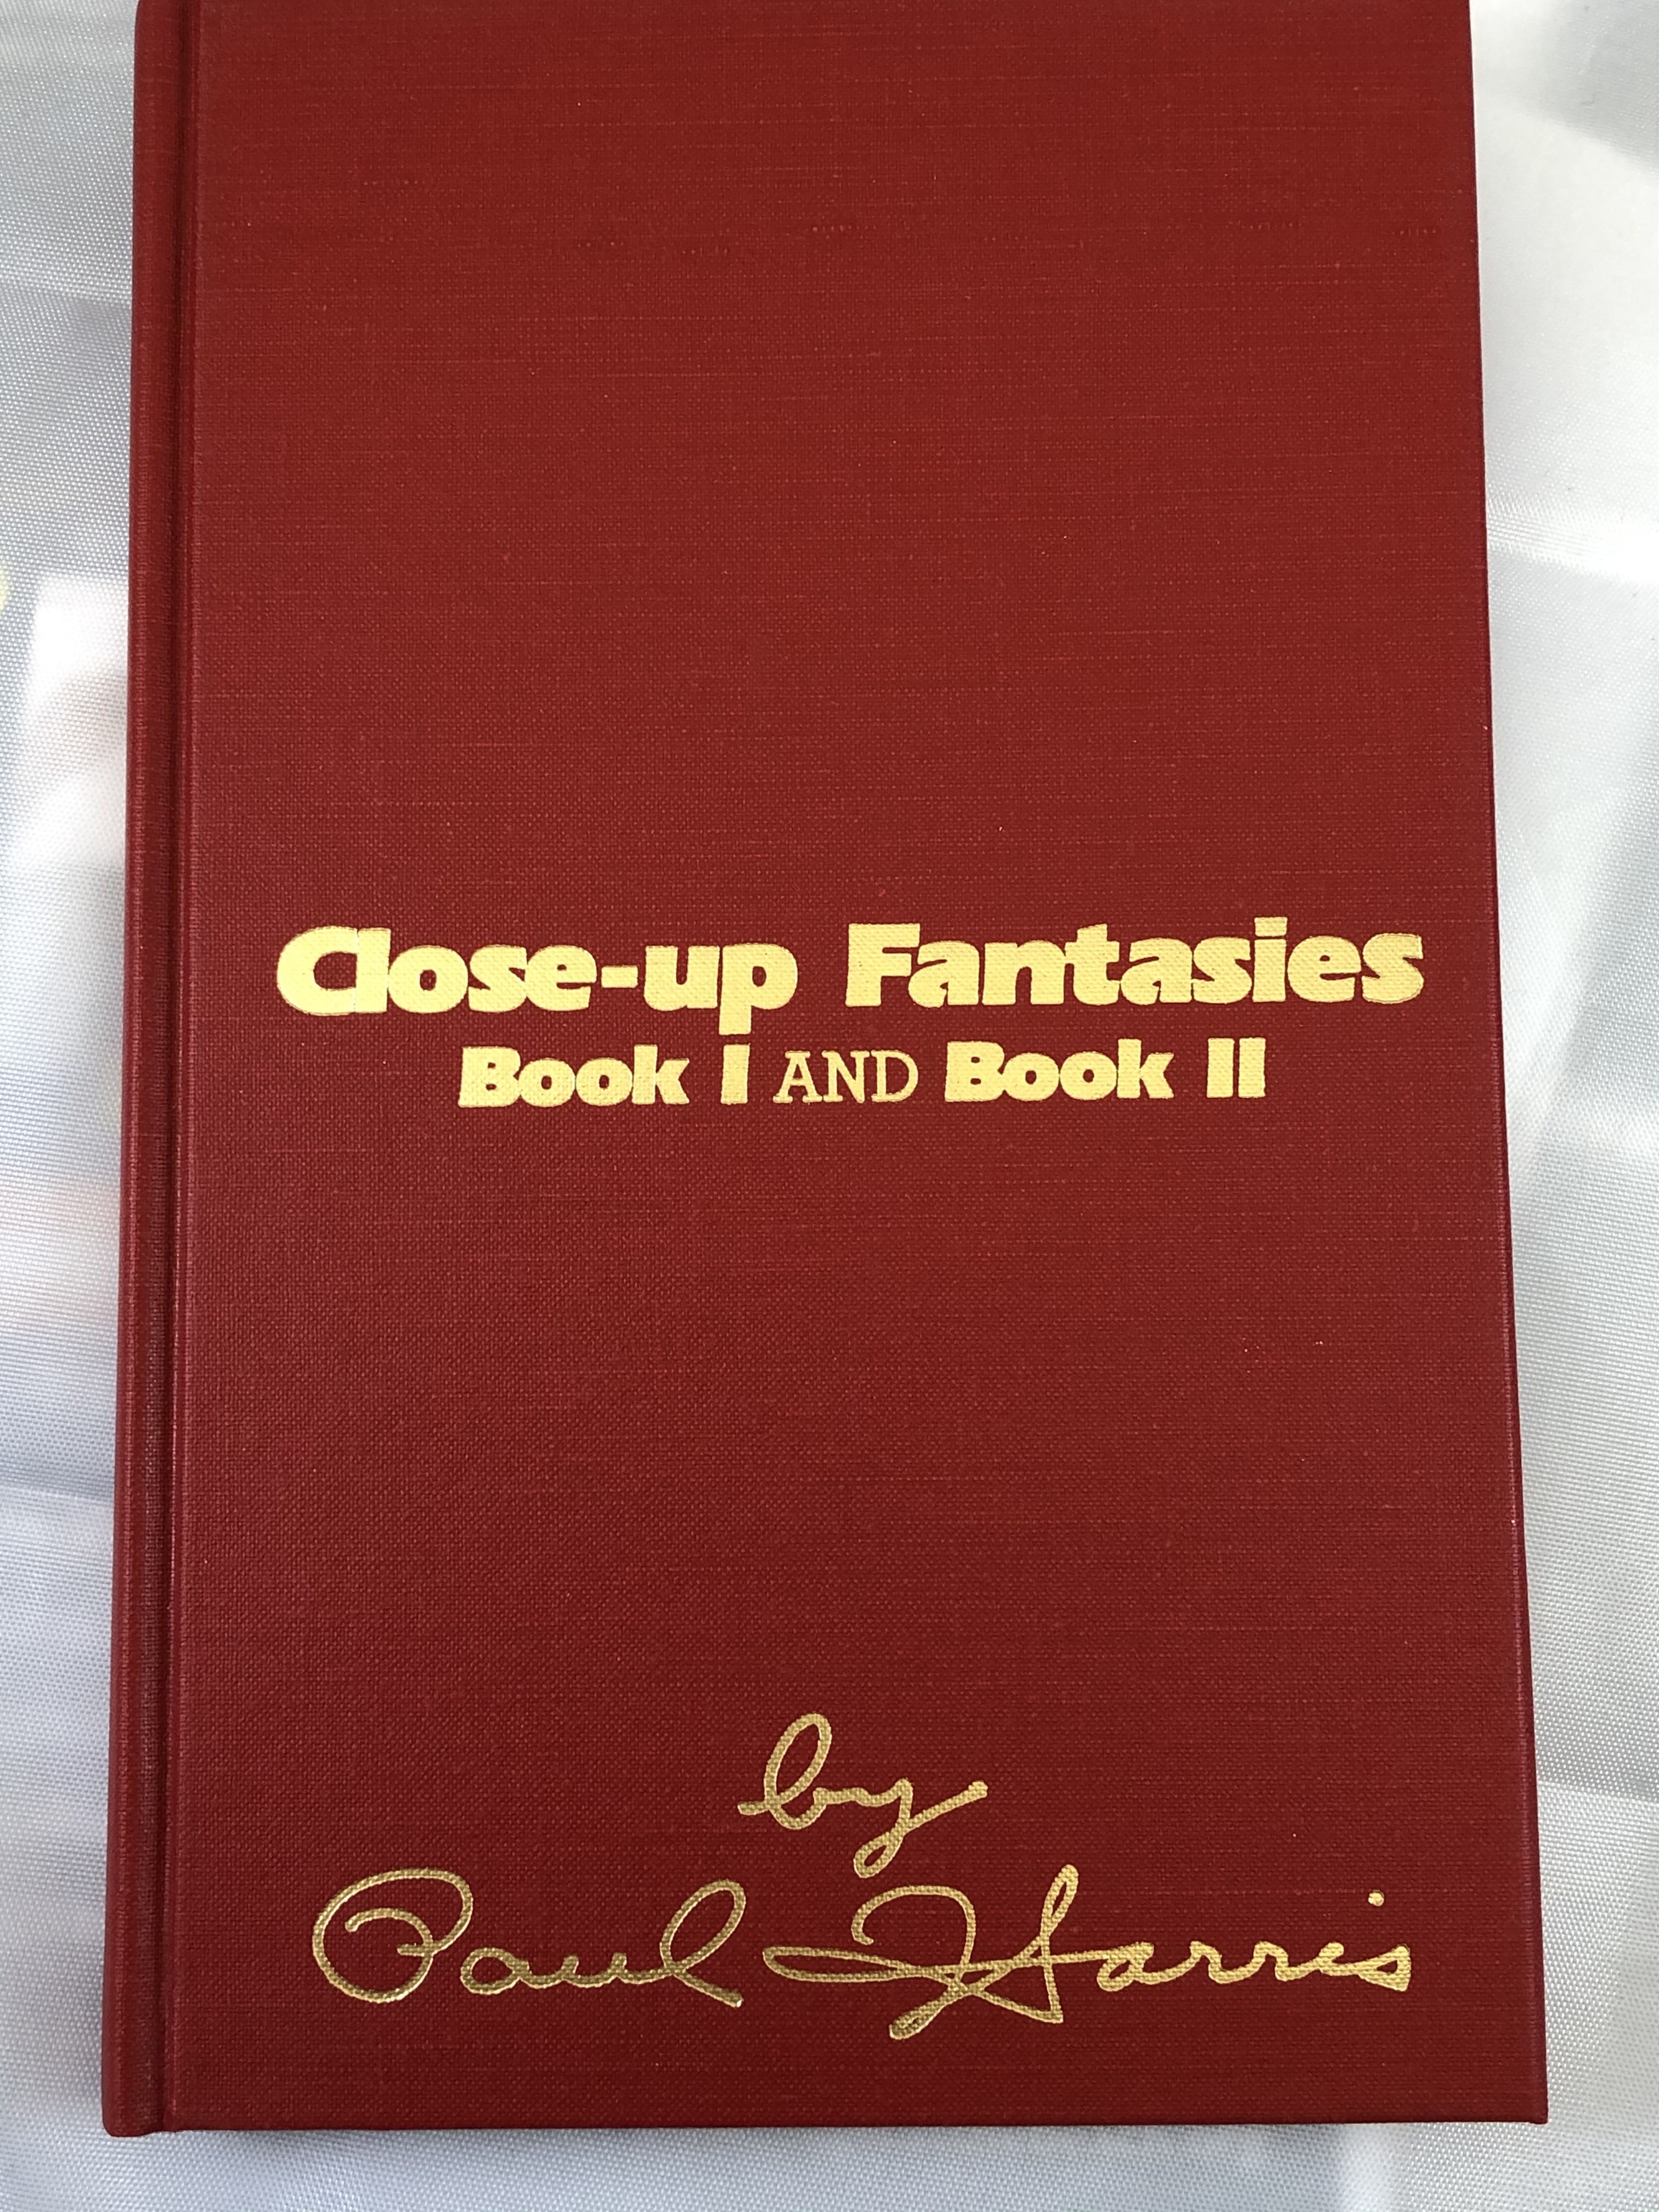 Close-up Fantasies Books 1 & 2 by Paul Harris - Magic Methods